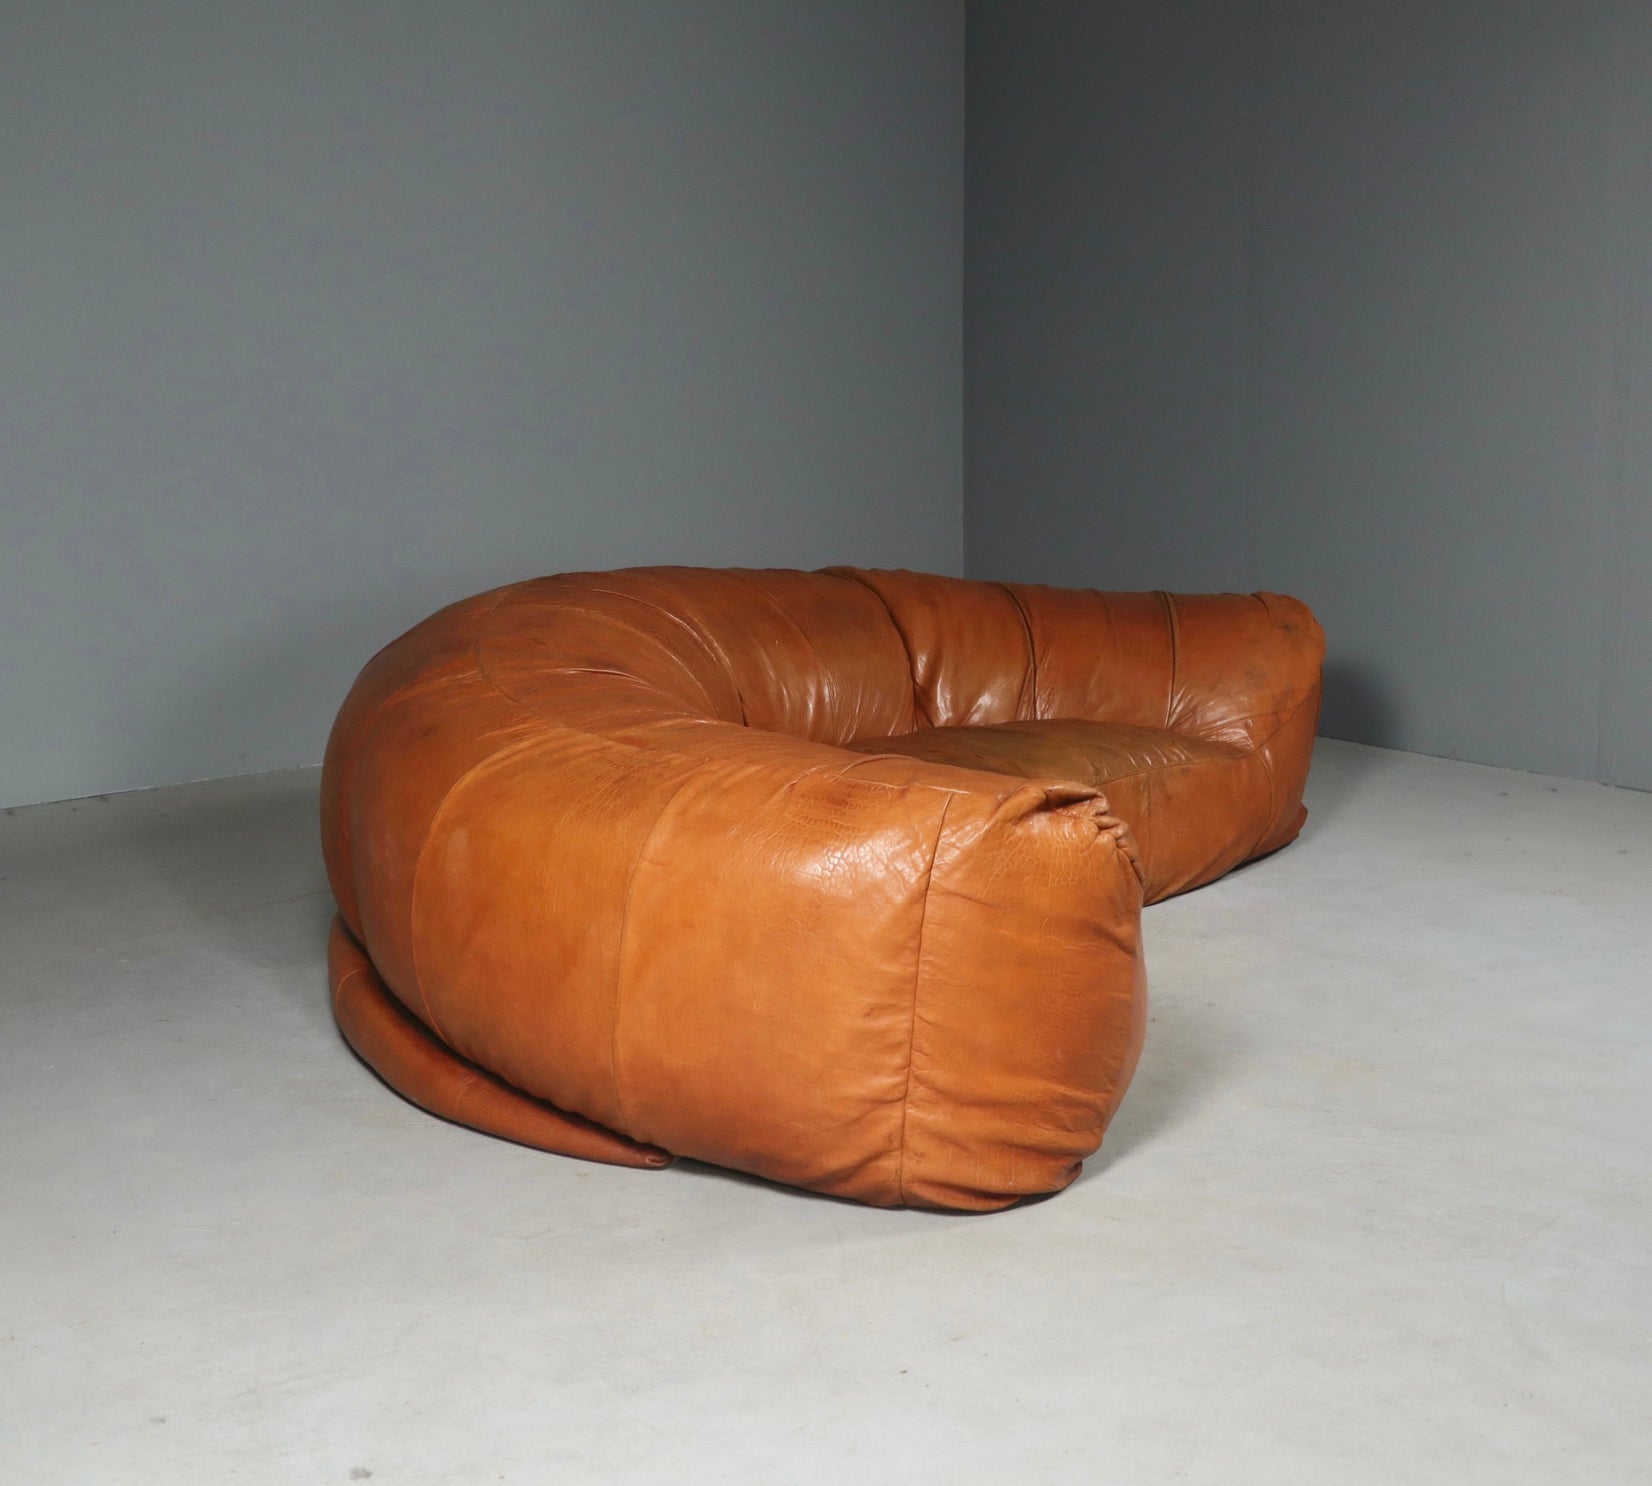 Leather Croissant Sofa by Raphael Raffel for Honore Paris, 1970s France